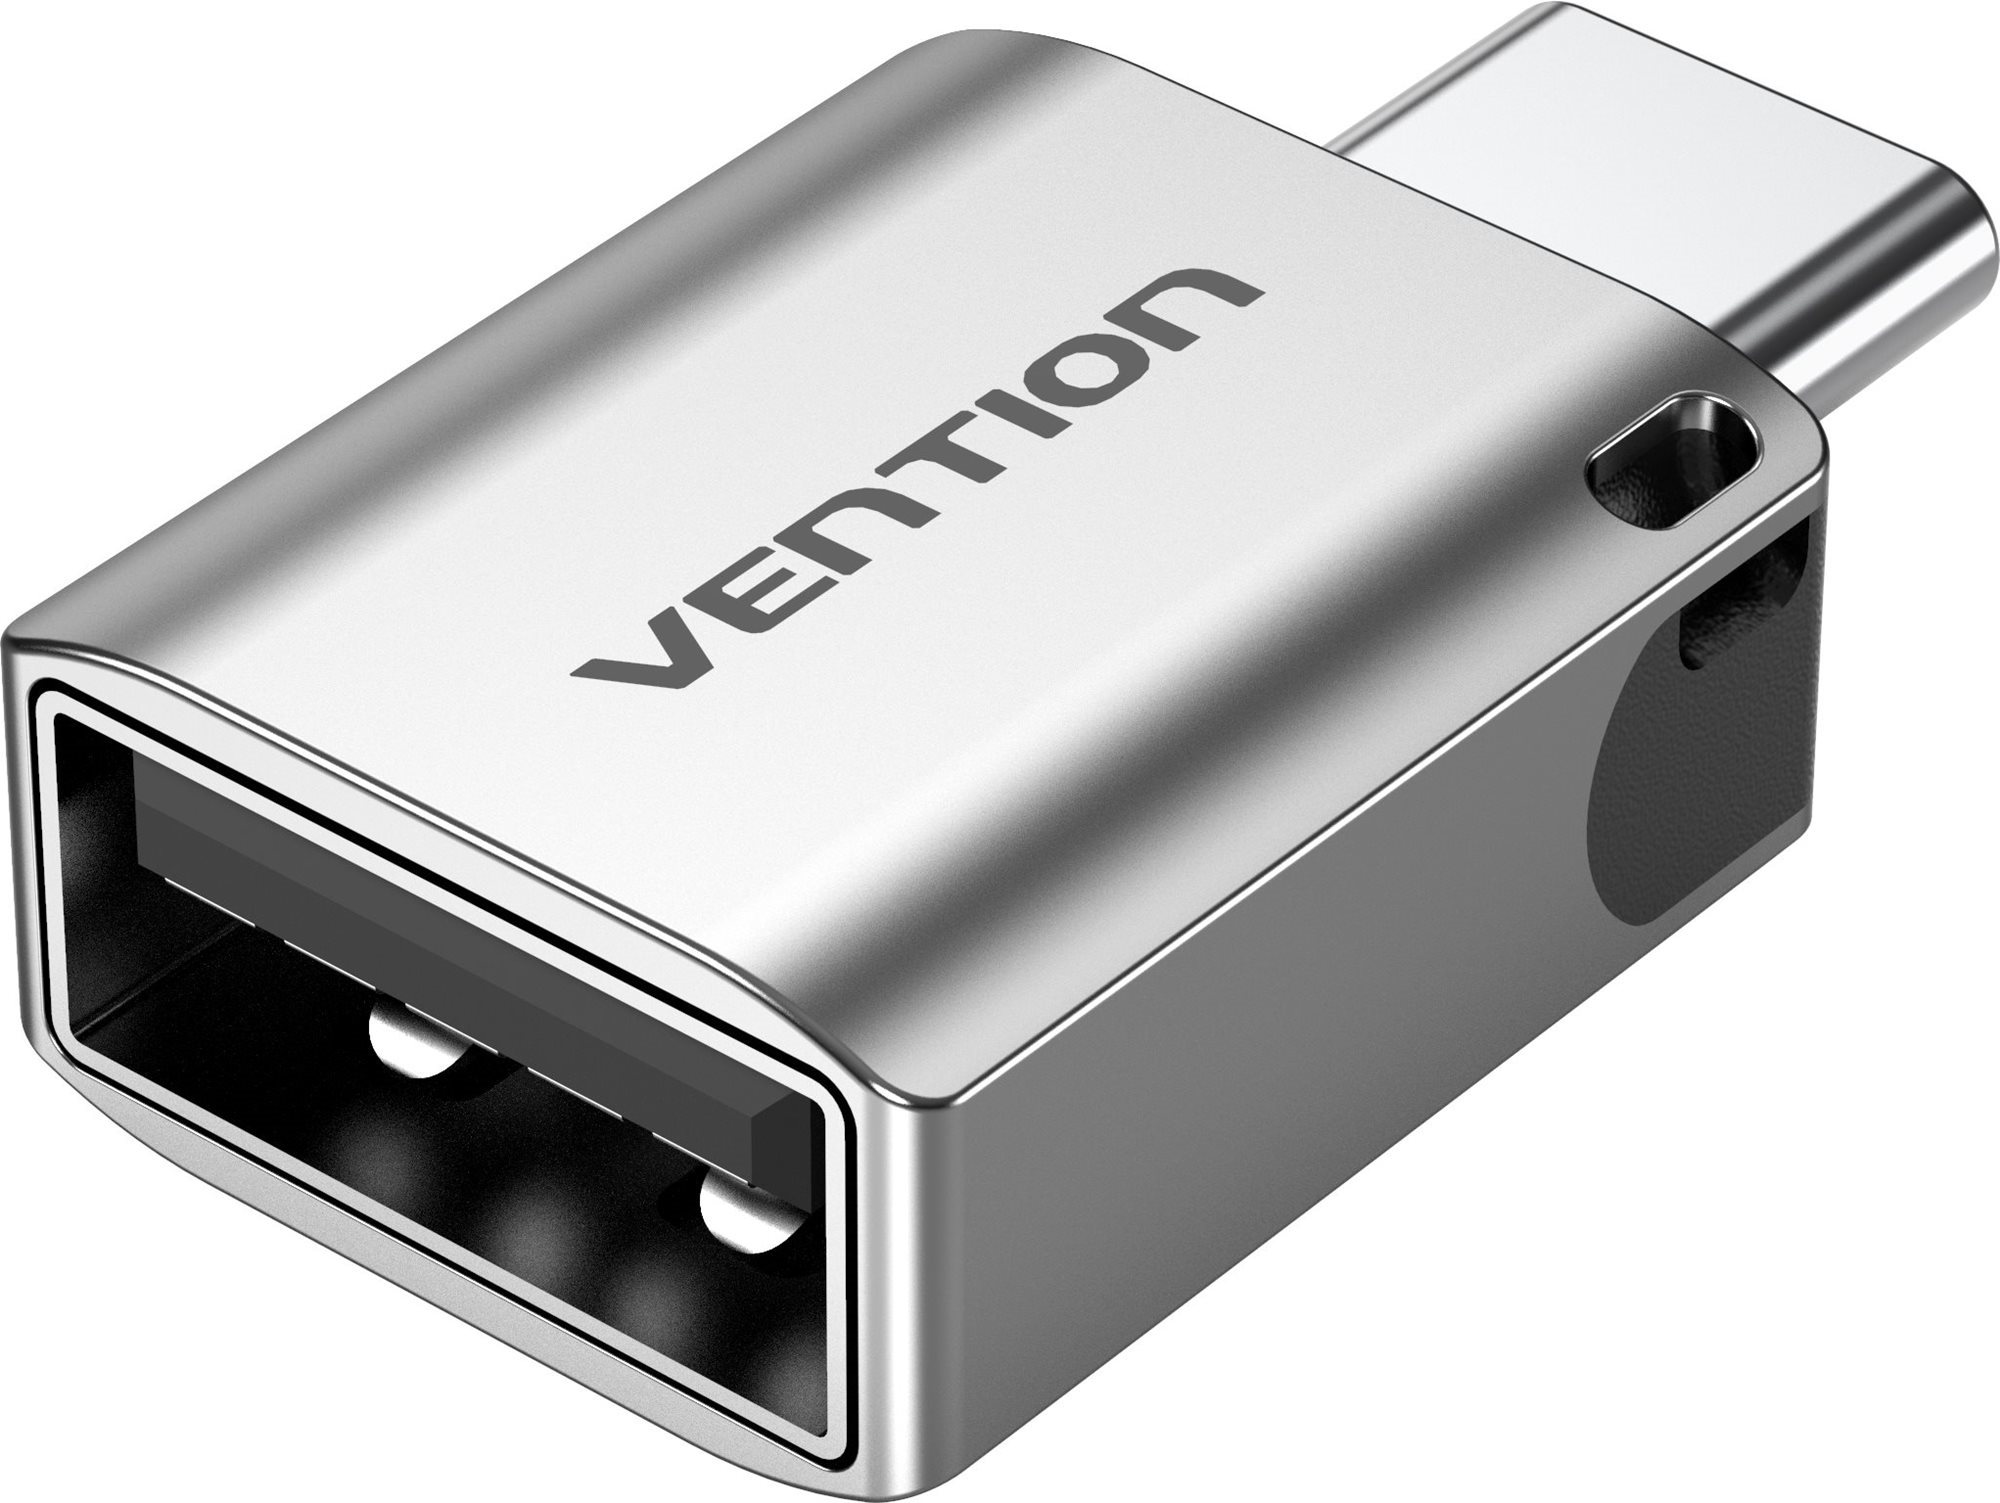 Vention USB-C (M) to USB 3.0 (F) OTG Adapter Gray Aluminum Alloy Type